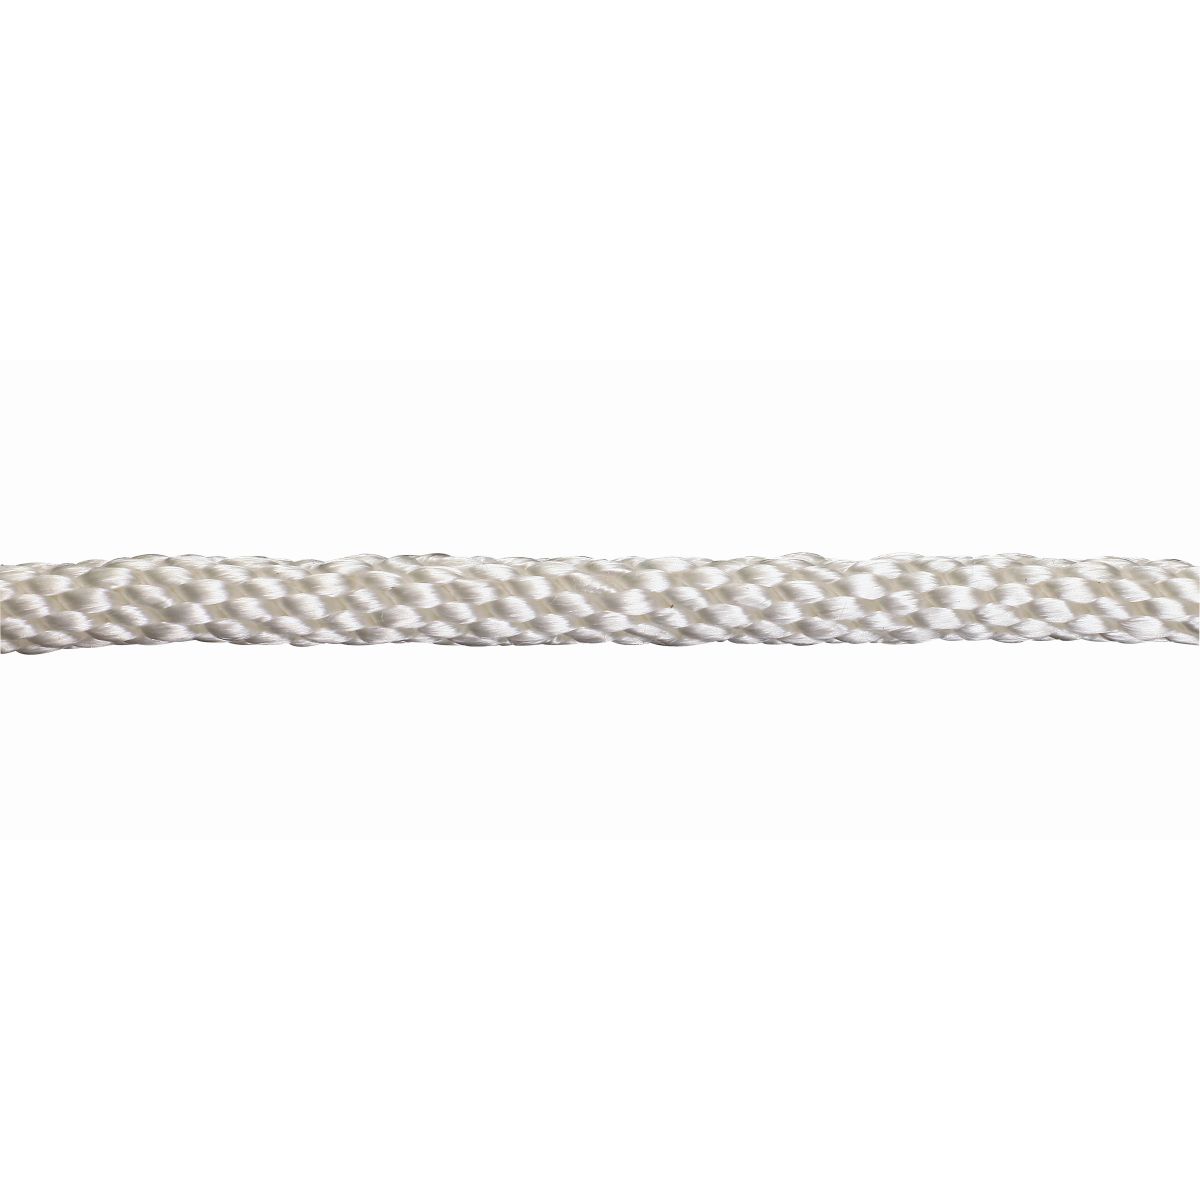 1/4" Solid Braid Nylon Rope